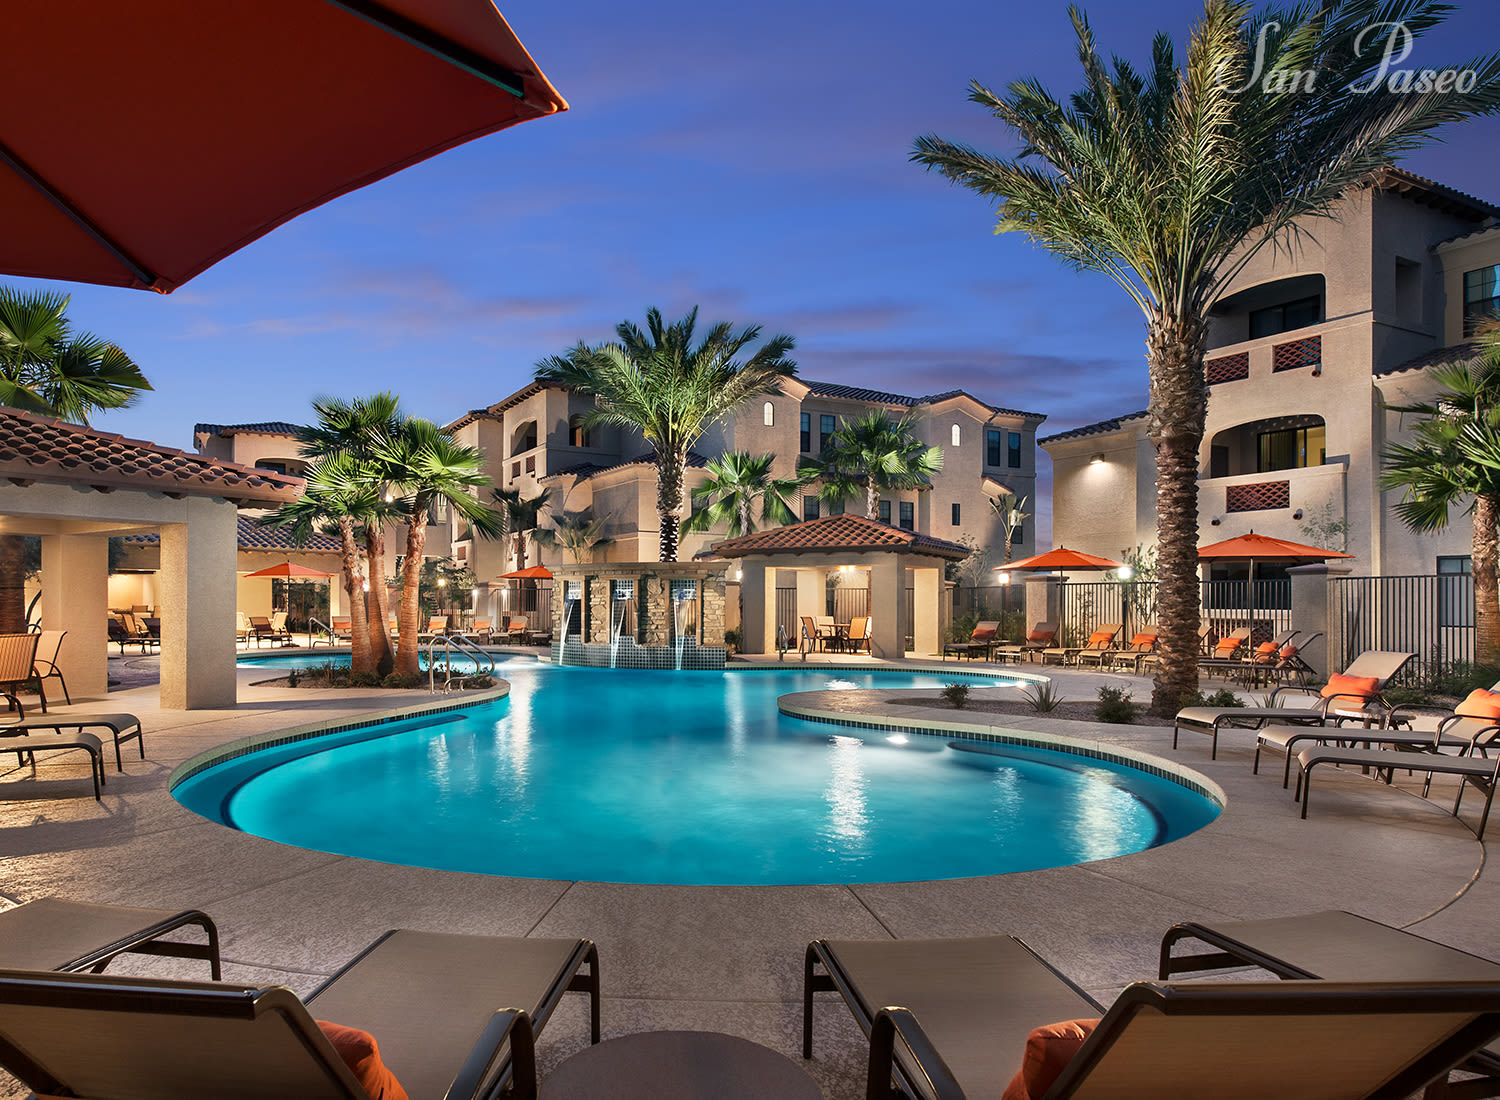 San Paseo apartments in Phoenix, Arizona